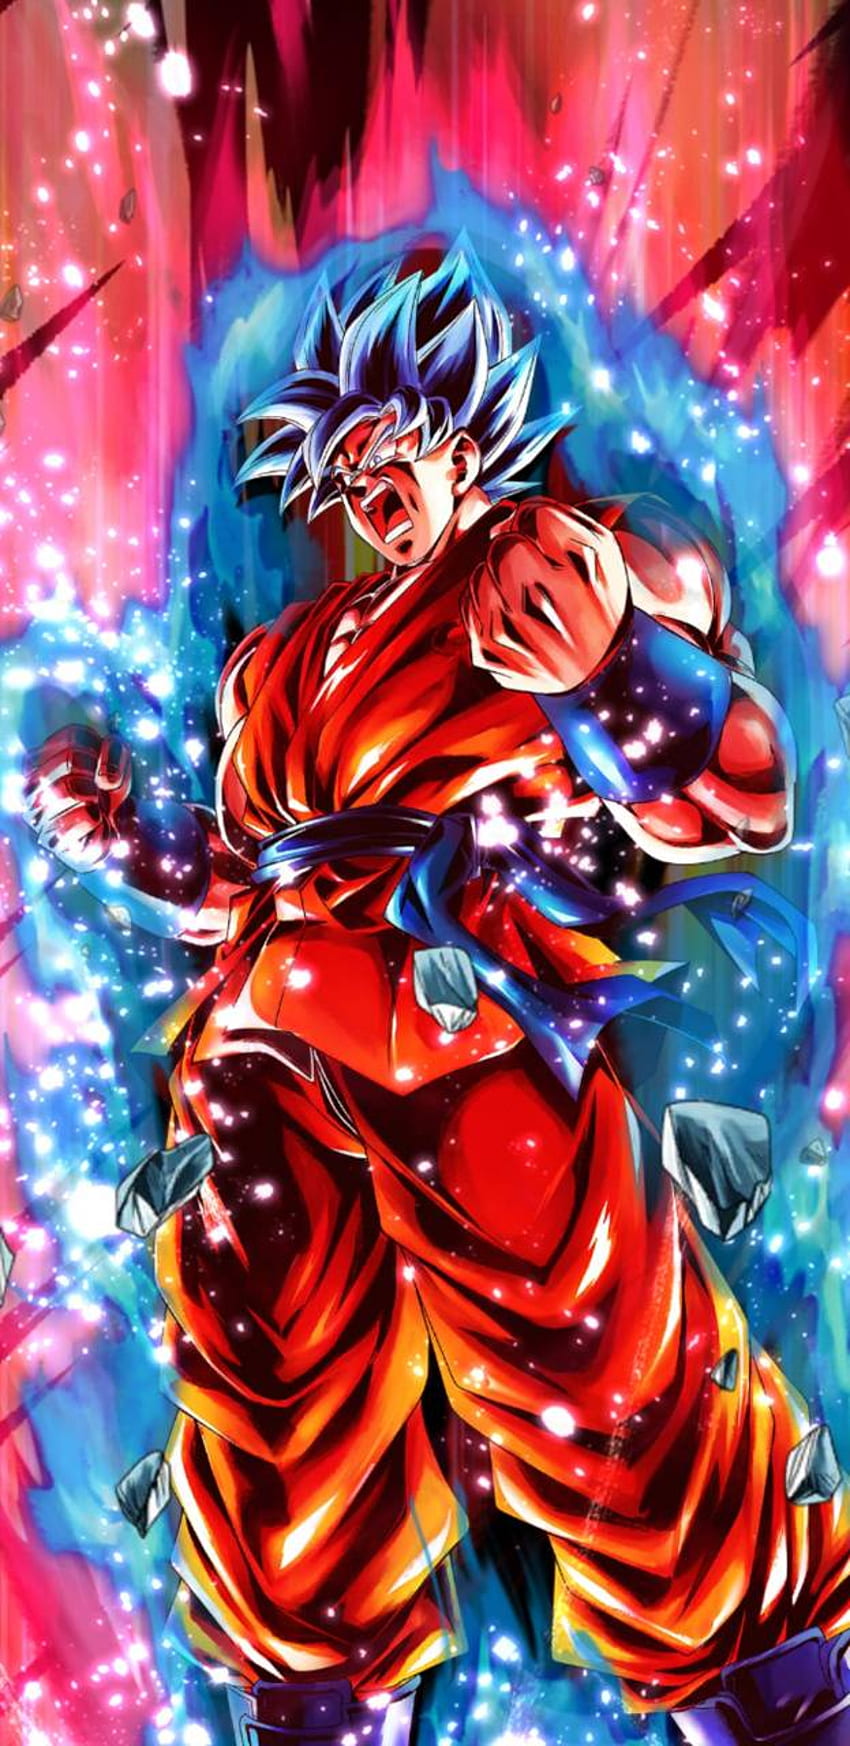 Hydros on X Super Kaioken Goku Character Images  4K PC Wallpaper  4K  Phone Wallpaper DBLegends DragonBallLegends VegitoBlue  httpstcoU1EZ4FieF1  X